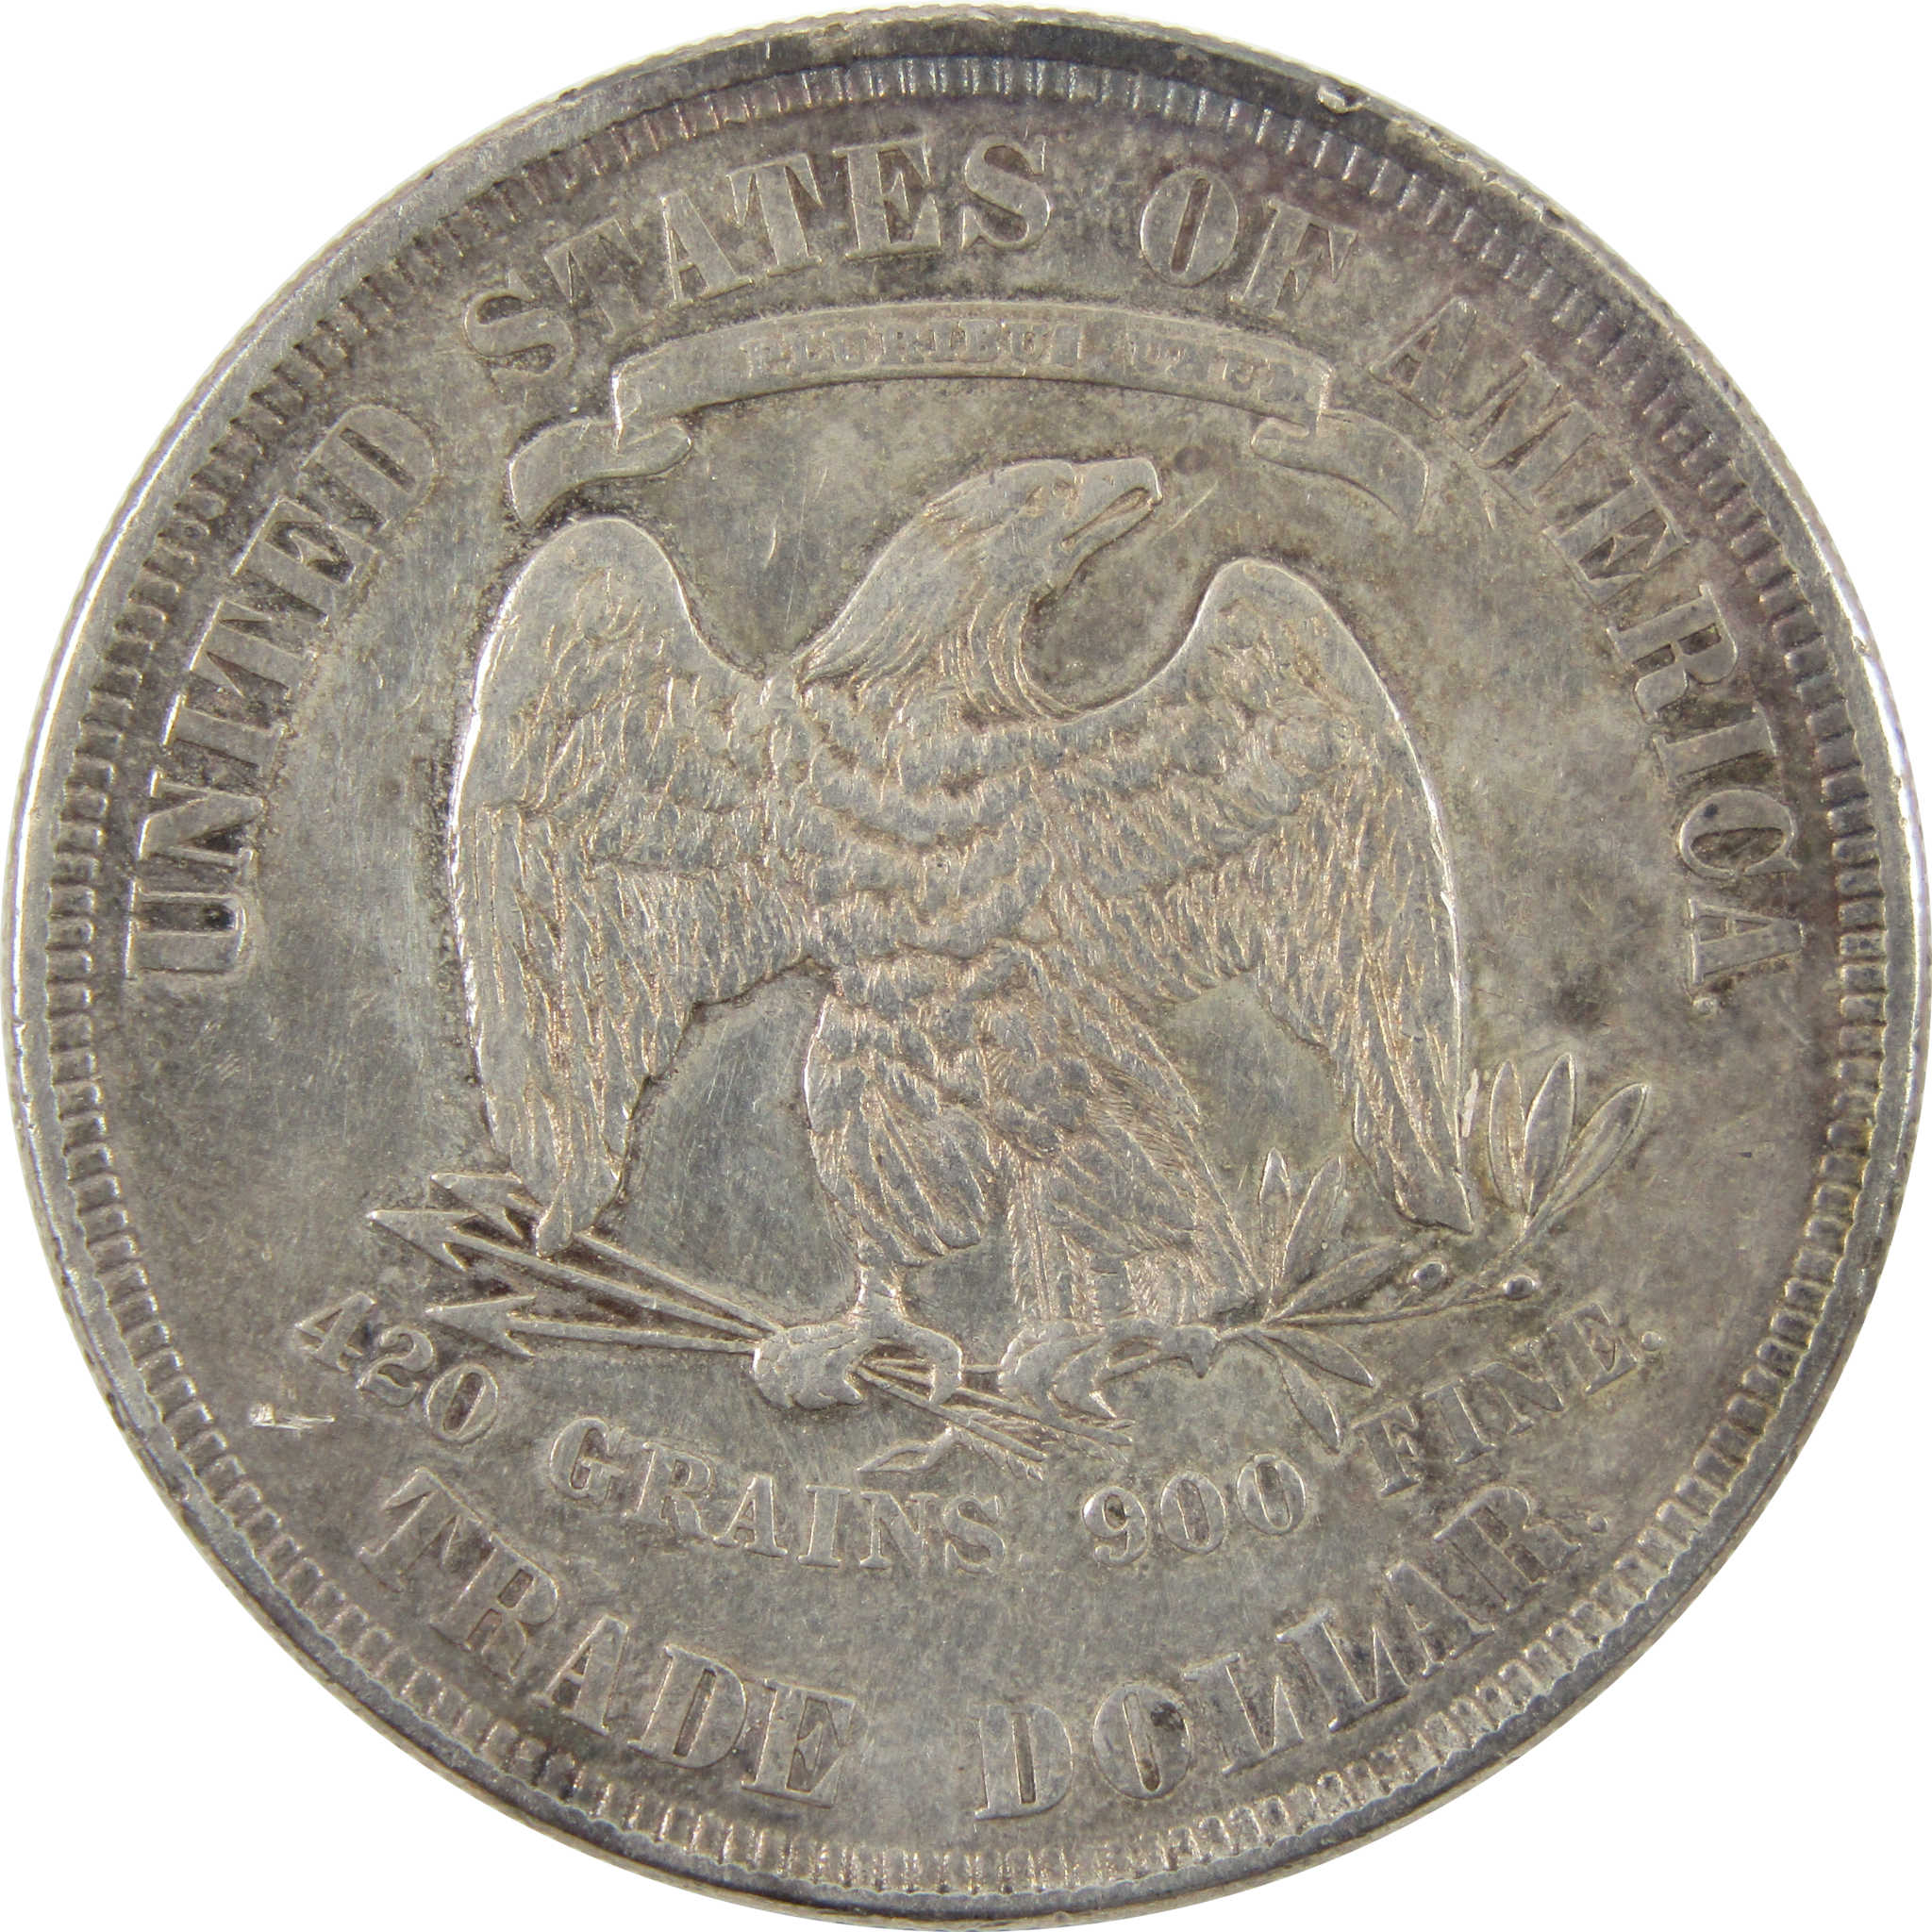 1877 Trade Dollar VF Very Fine 90% Silver $1 Coin SKU:I10646